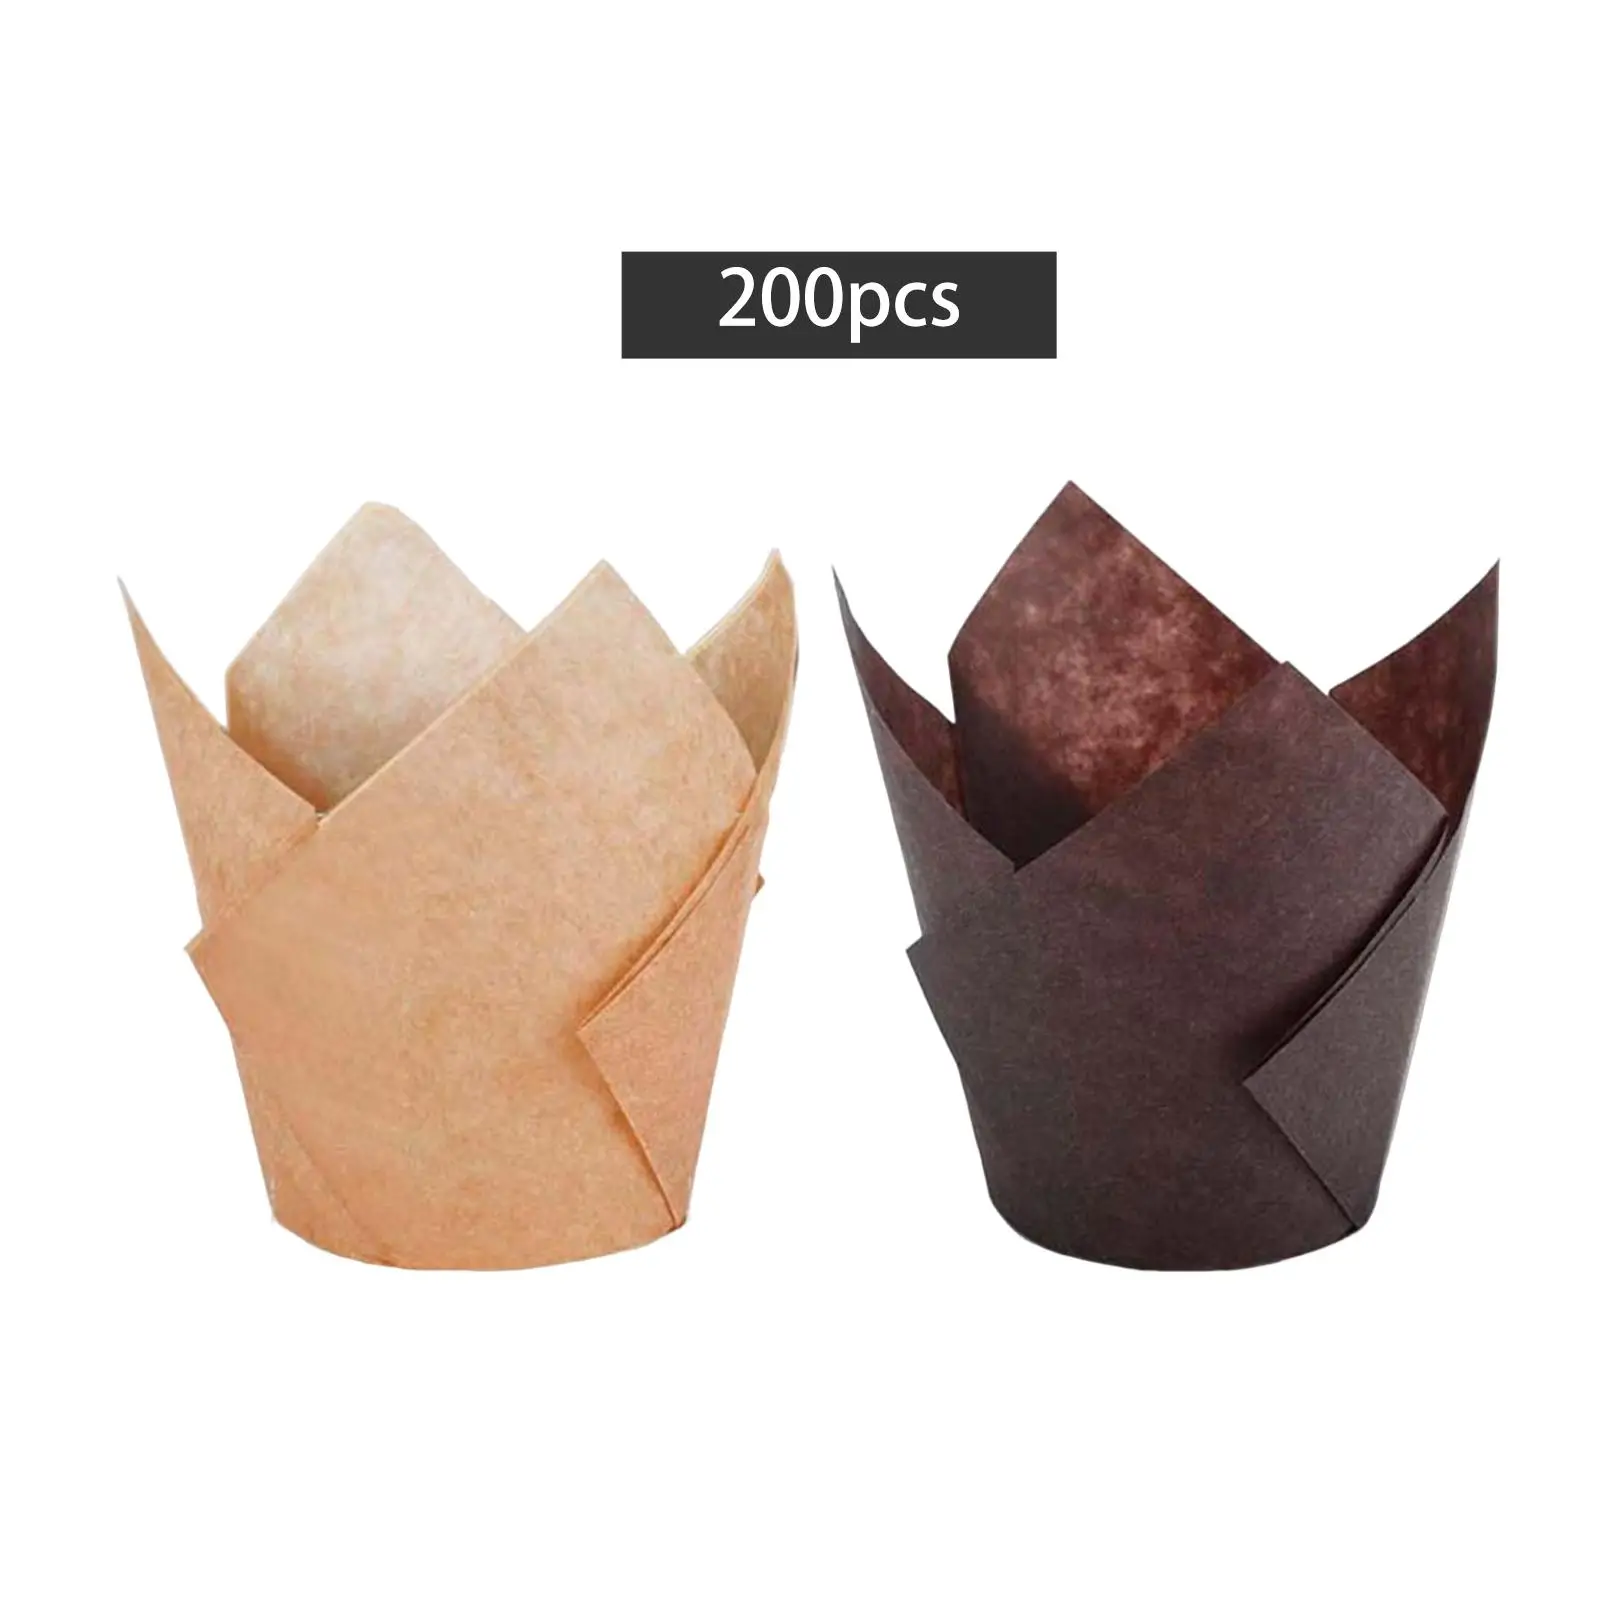 200Pcs Paper Cups Artistic Floral shape Avoid Penetrate High Temperature Resistance Dessert Cups for Ice Cream Shops Restaurants